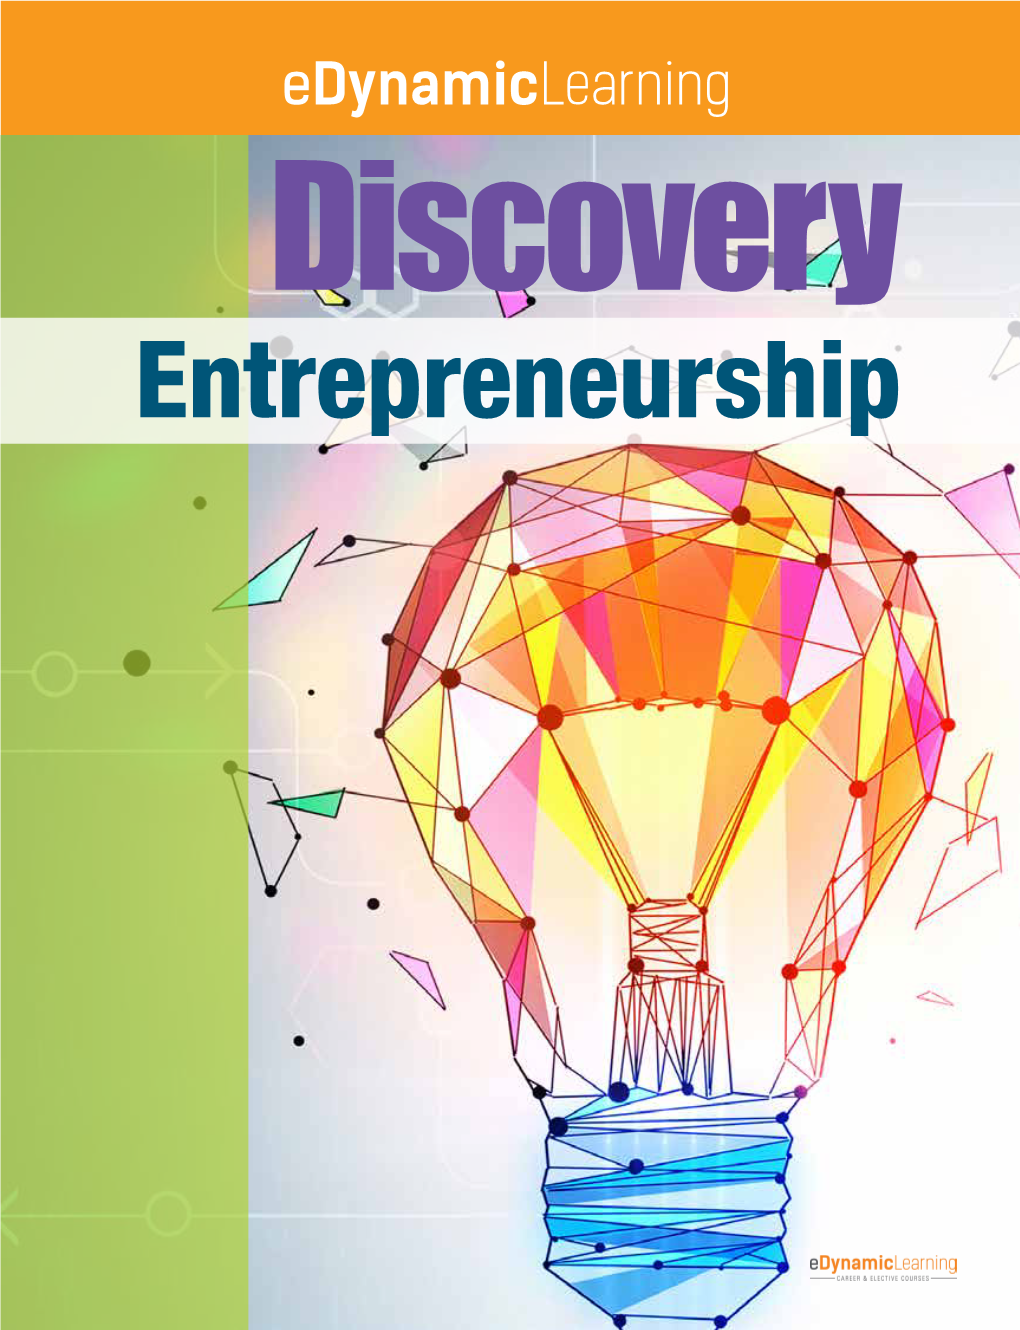 Edynamic Learning Discovery Article: Entrepreneurship